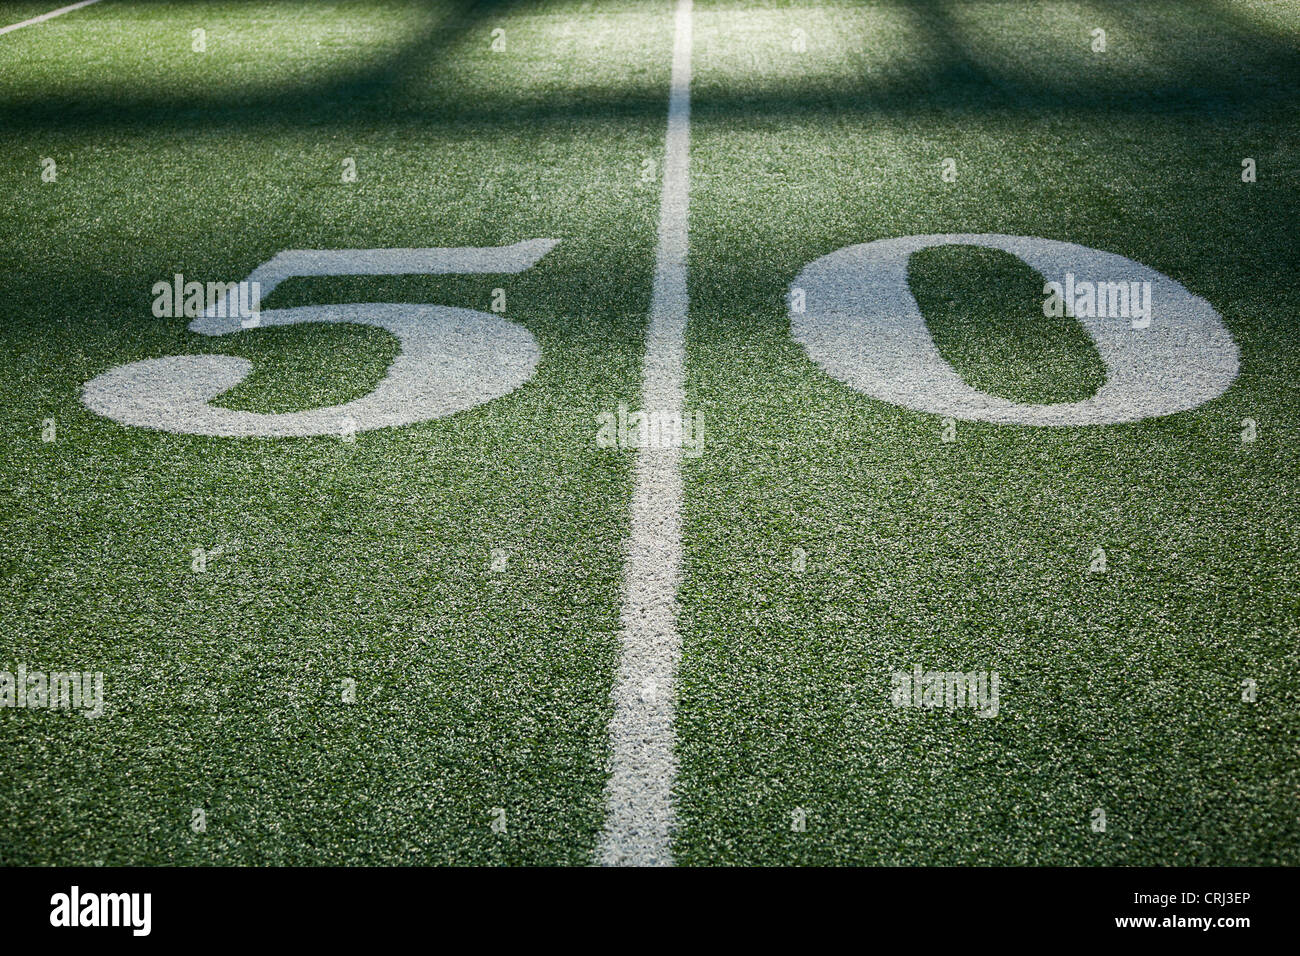 50 yard line marker in American Football stadium. Stock Photo